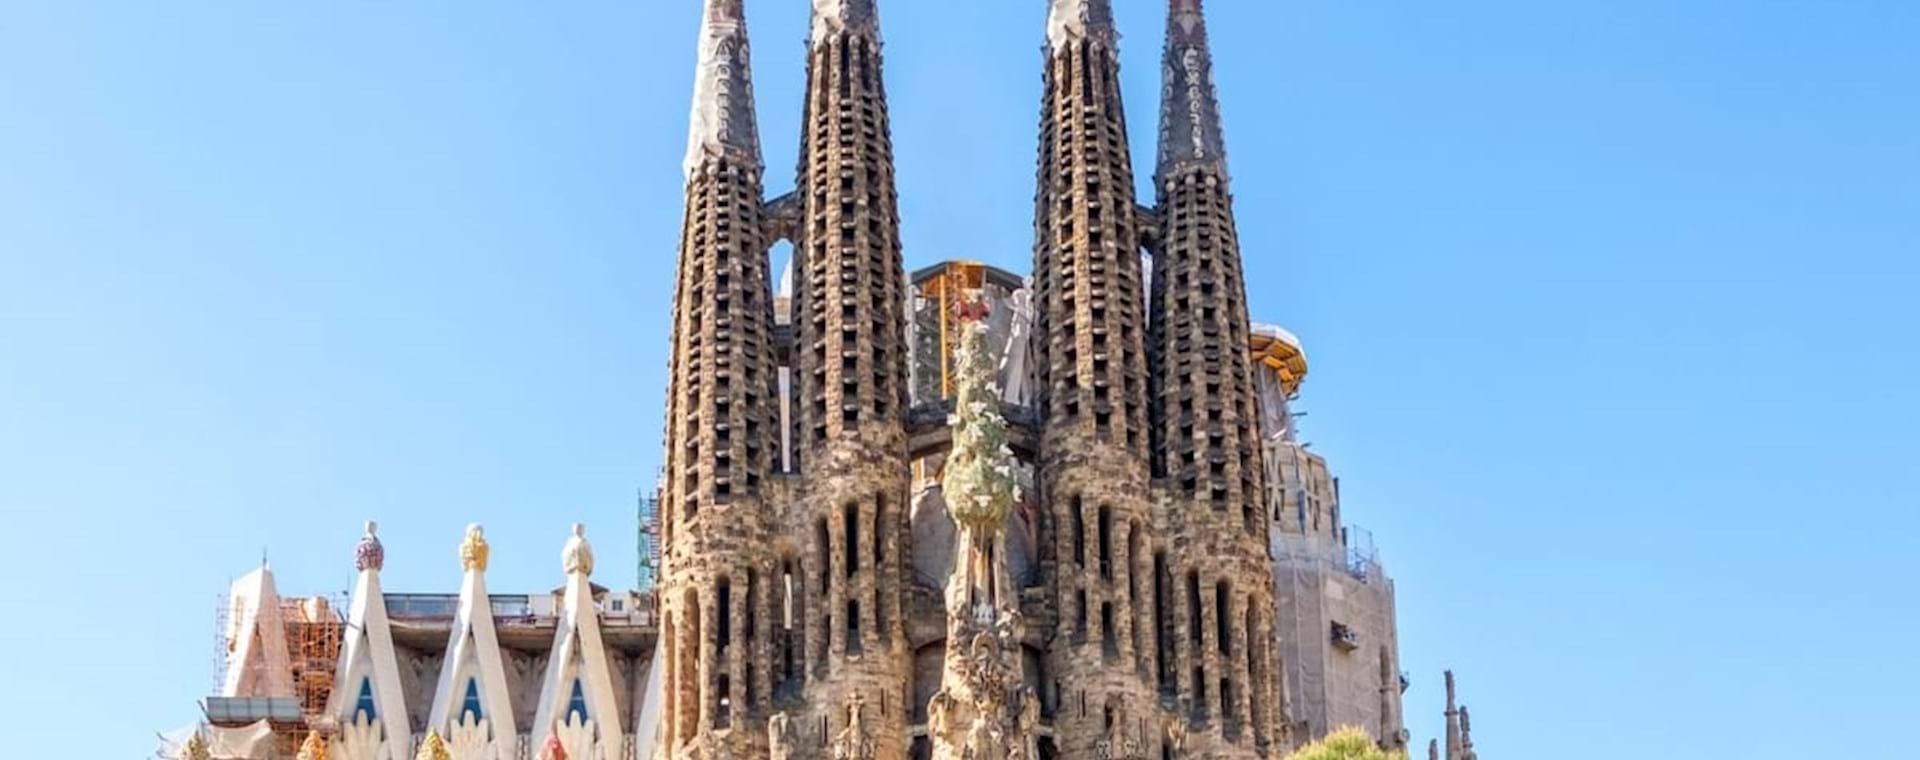 Sagrada Familia Cathedral Stunning Facade in Barcelona